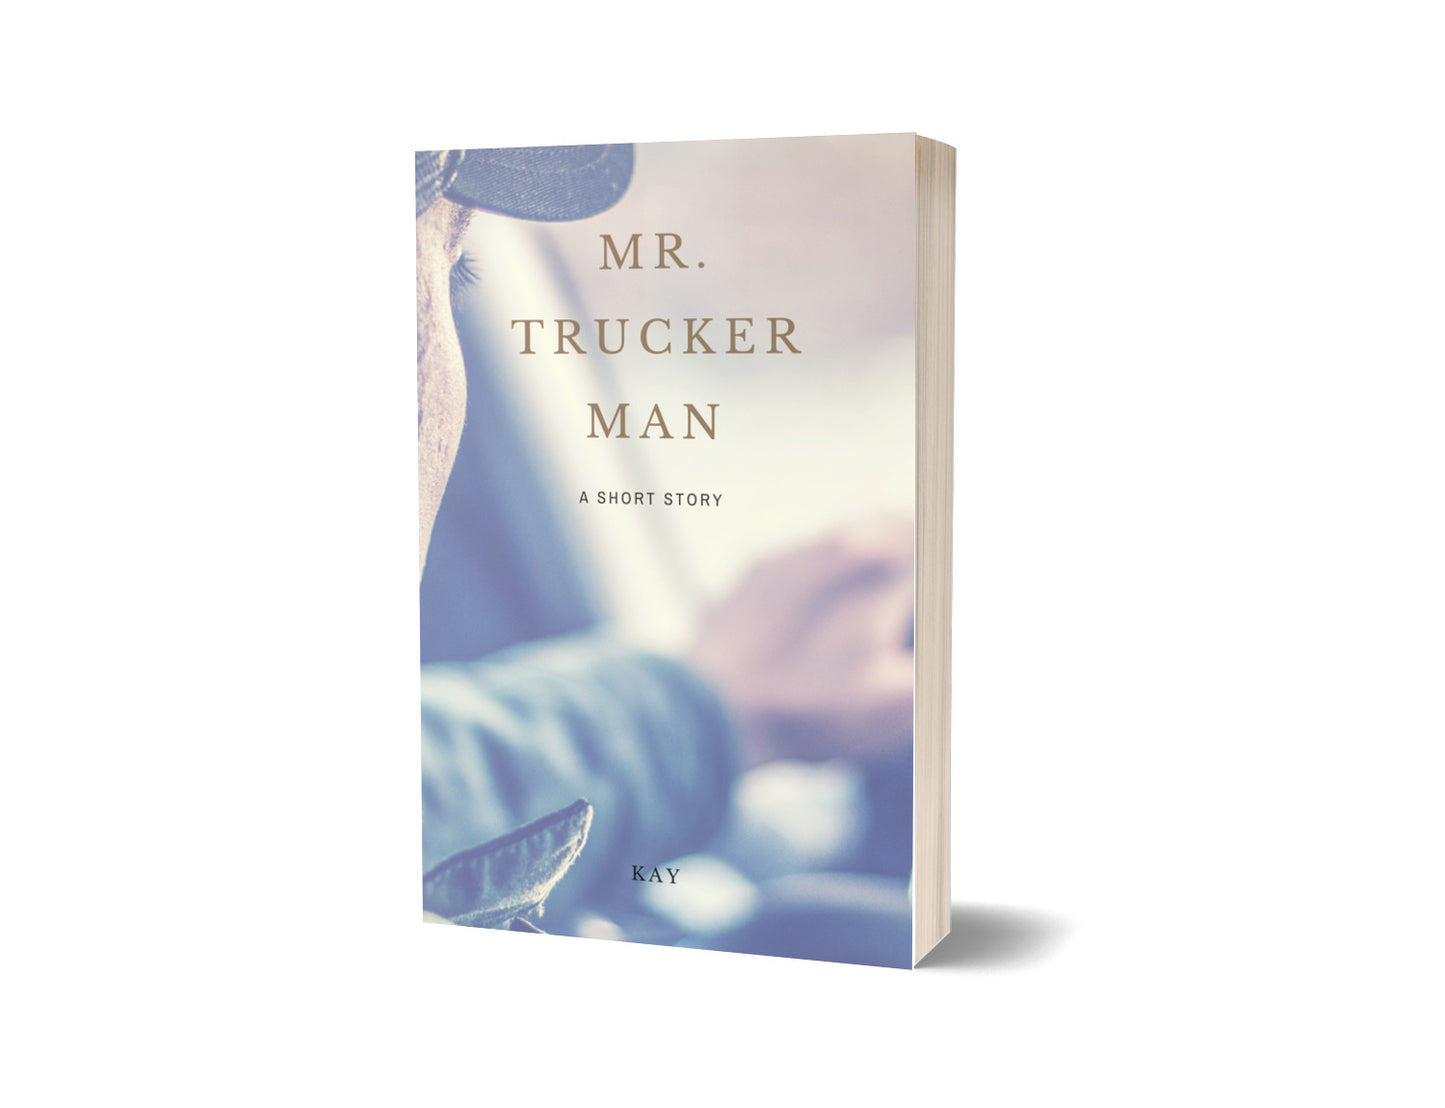 Mr. Trucker Man - A Short Story by Kay